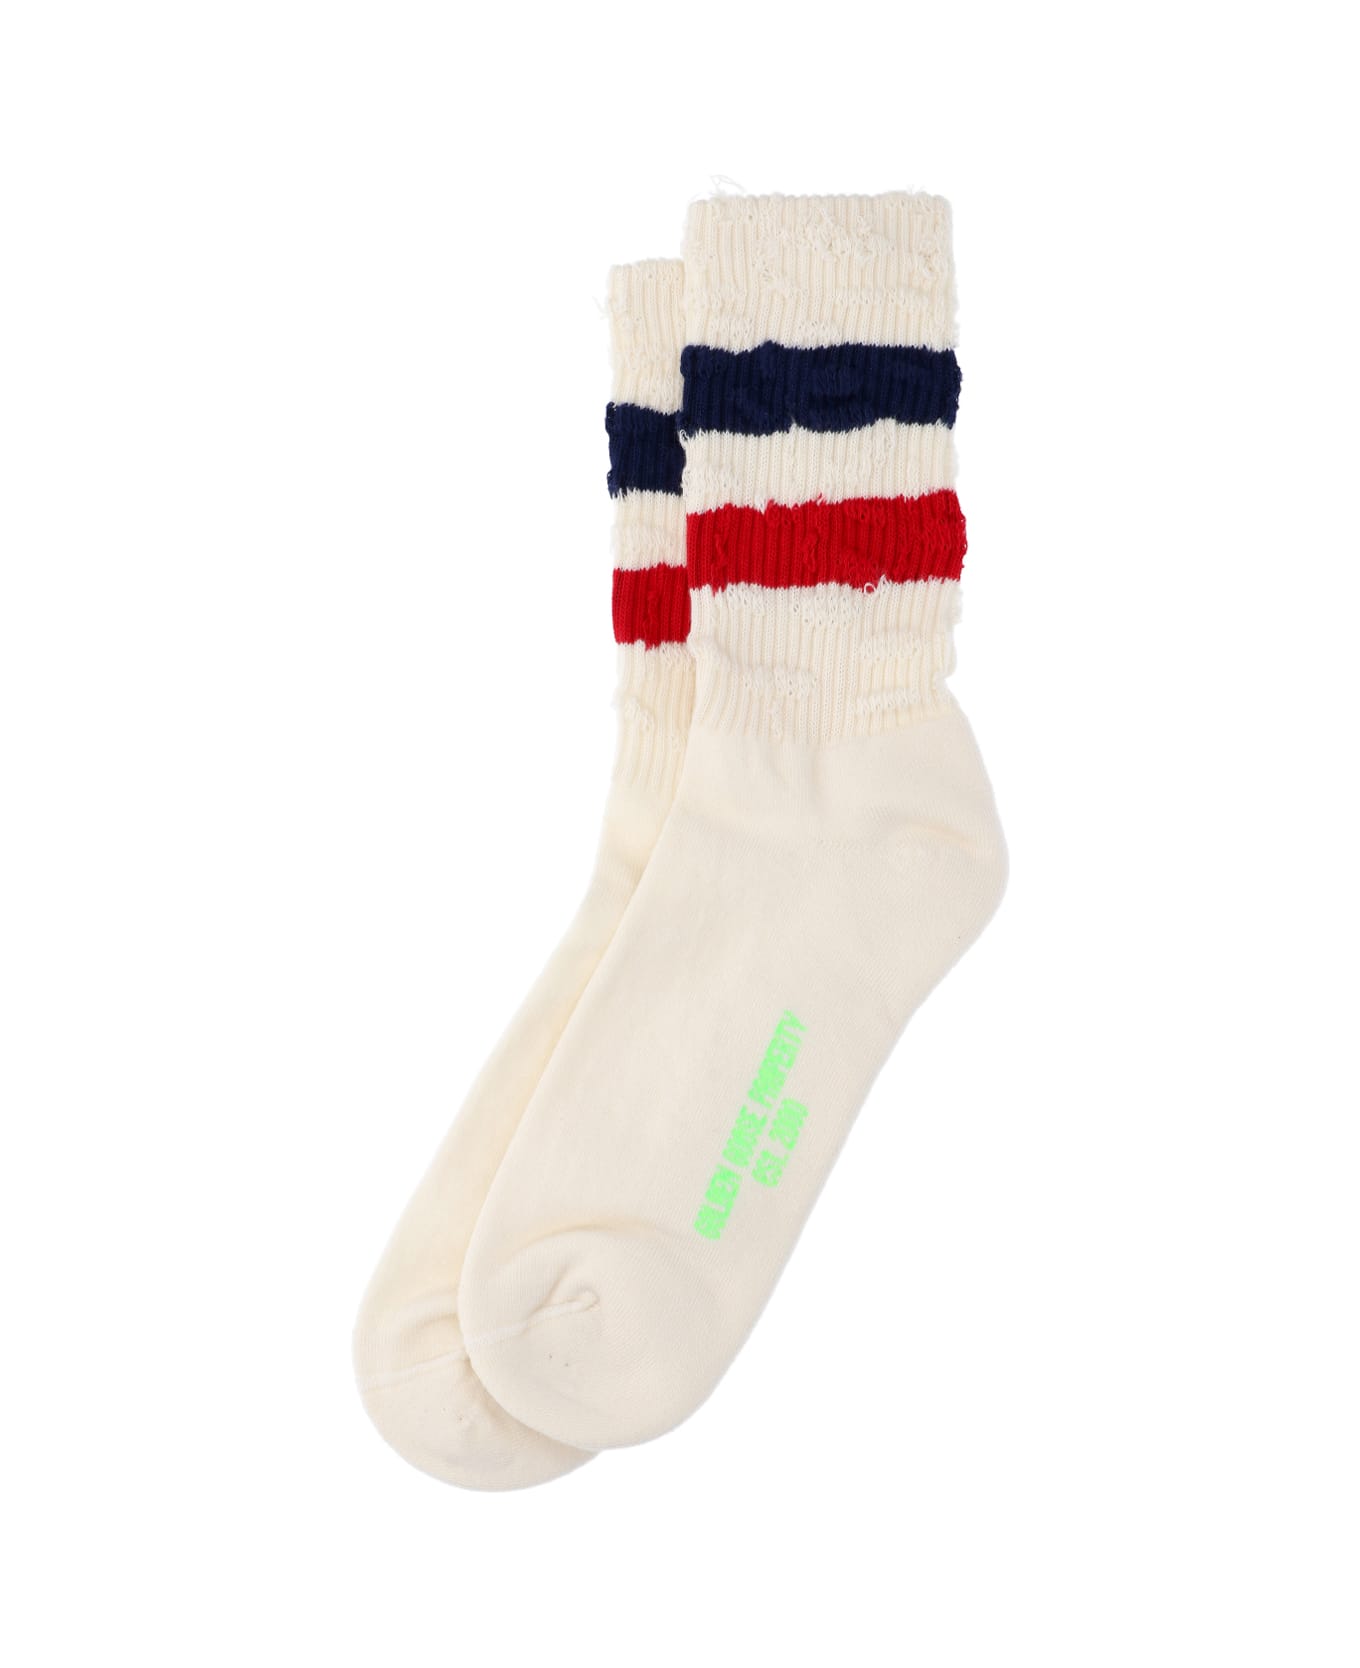 Golden Goose Striped Detail Socks - Old White Red Navy Green Fluo 靴下